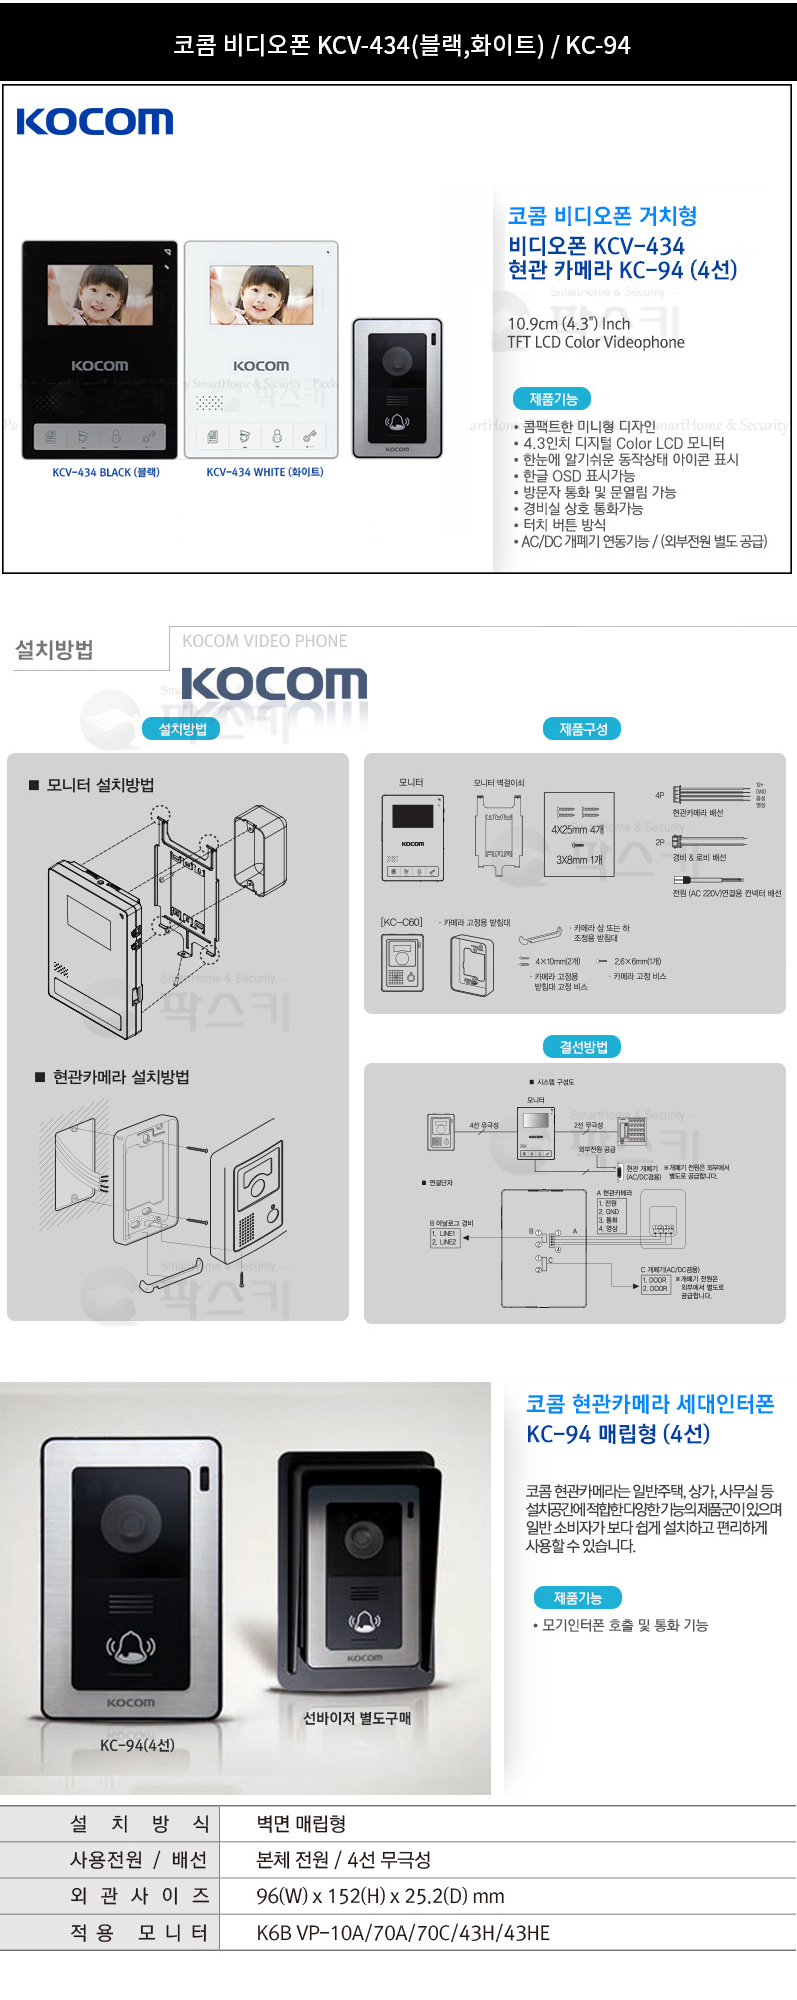 kocom_kcv-434_kc-94cam_detail_172248.jpg